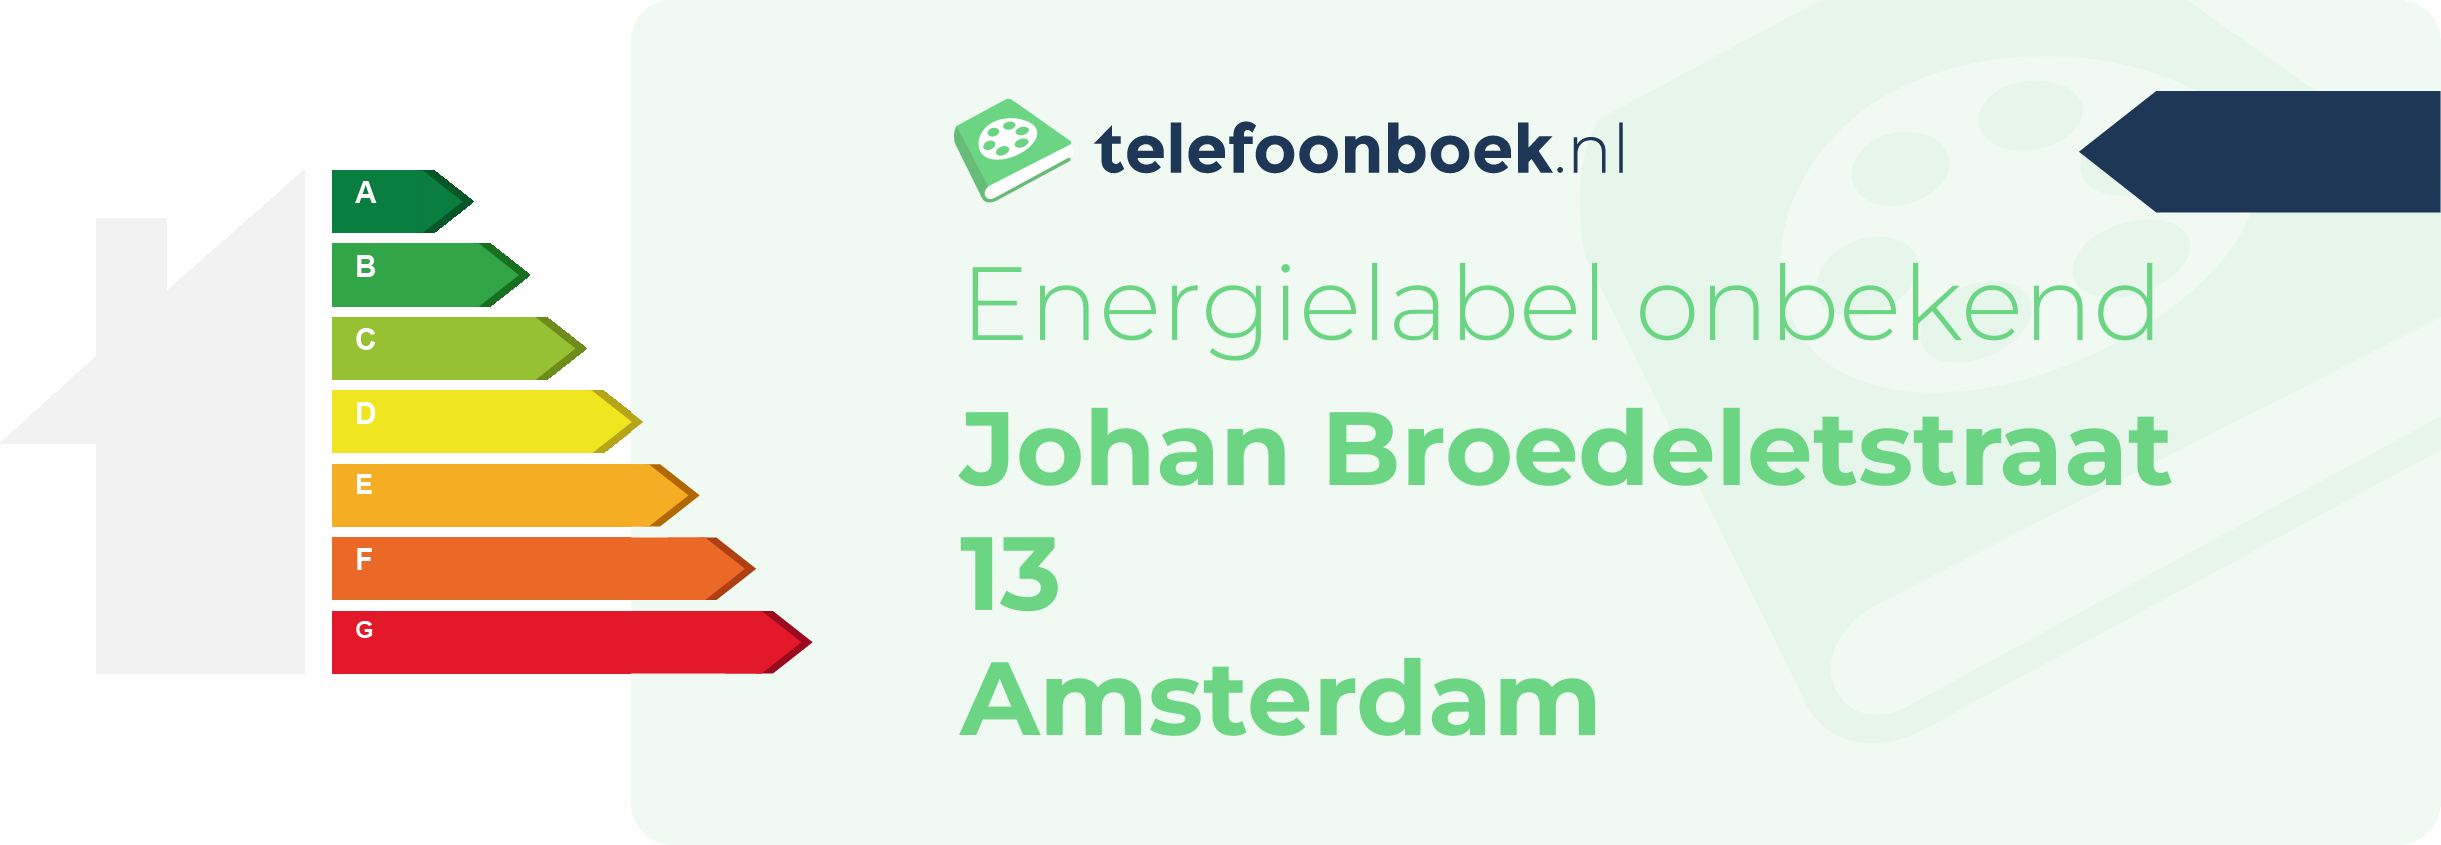 Energielabel Johan Broedeletstraat 13 Amsterdam